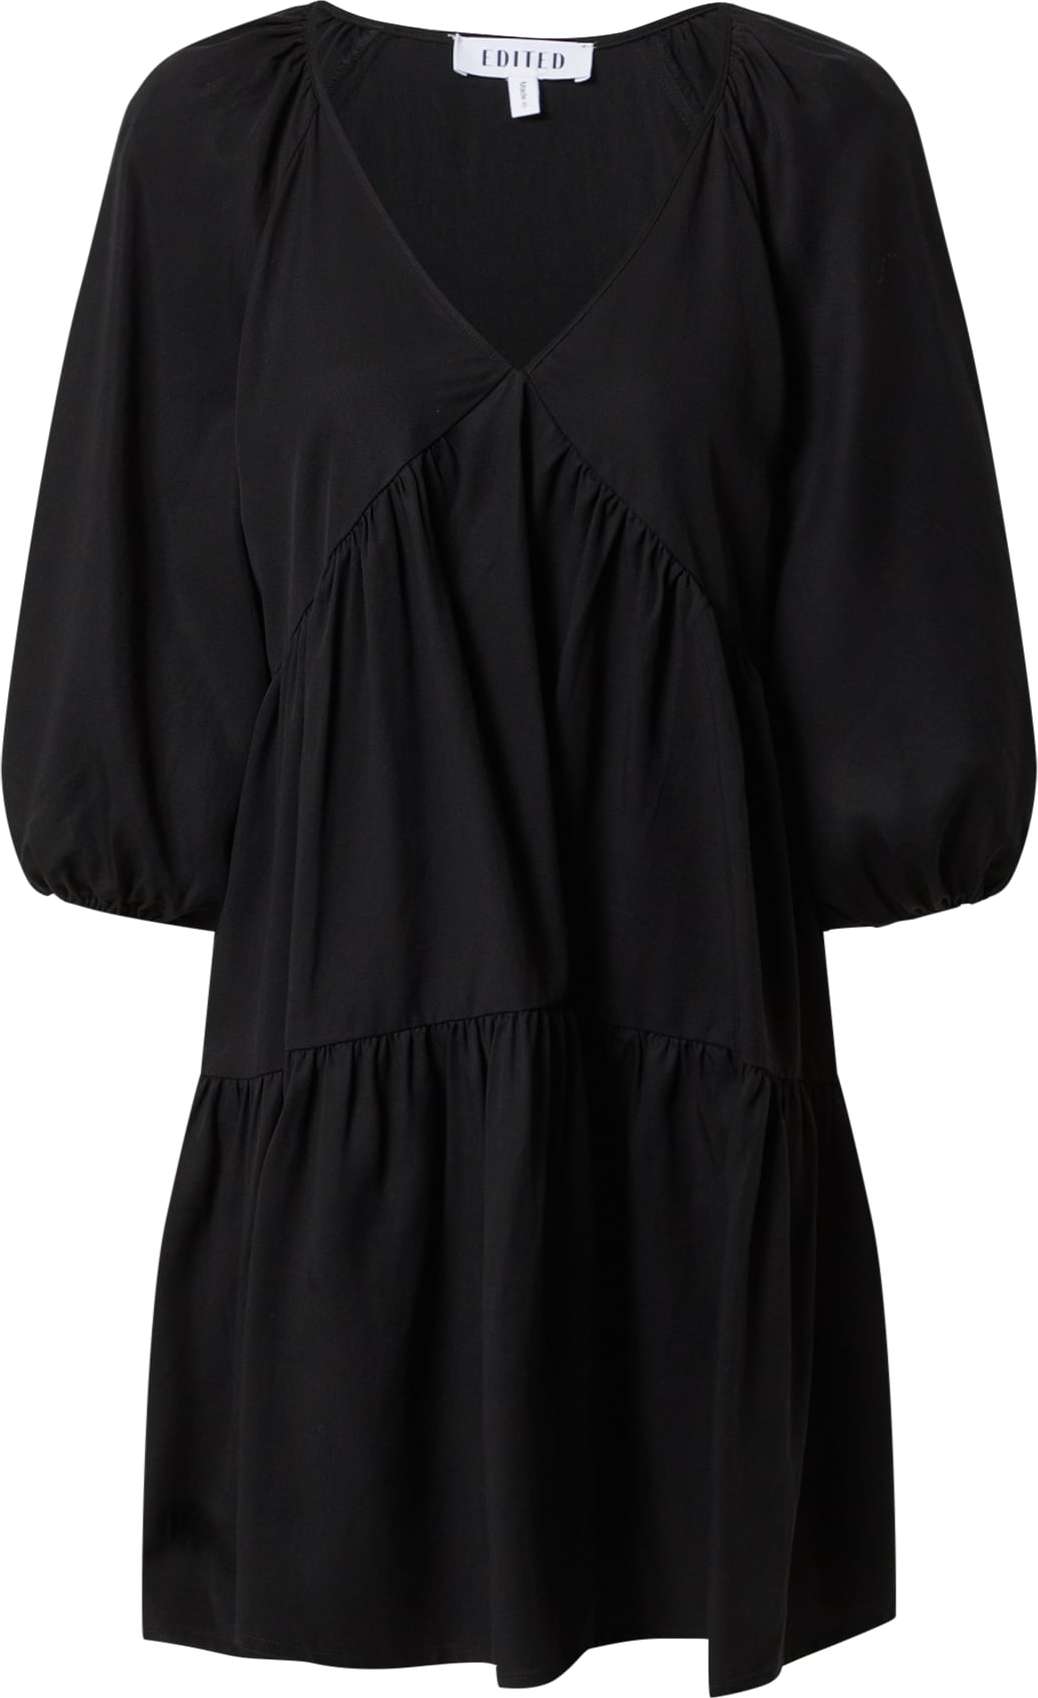 Šaty 'Aamu' EDITED černá